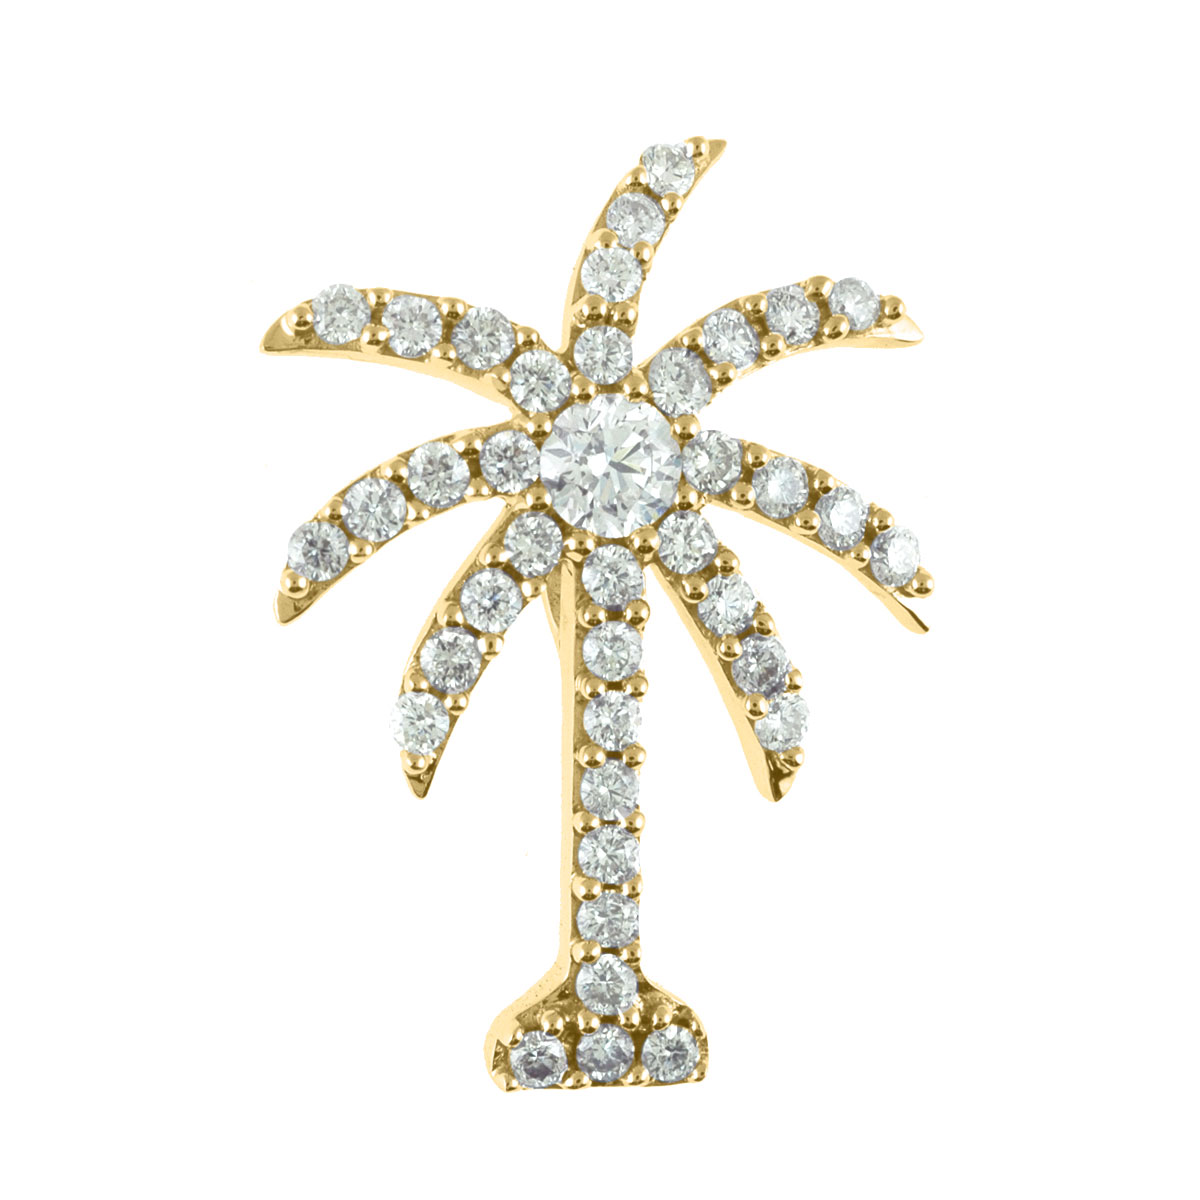 JCX2850: 1.00 ct diamond palm tree shaped pendant set in 14k yellow gold.